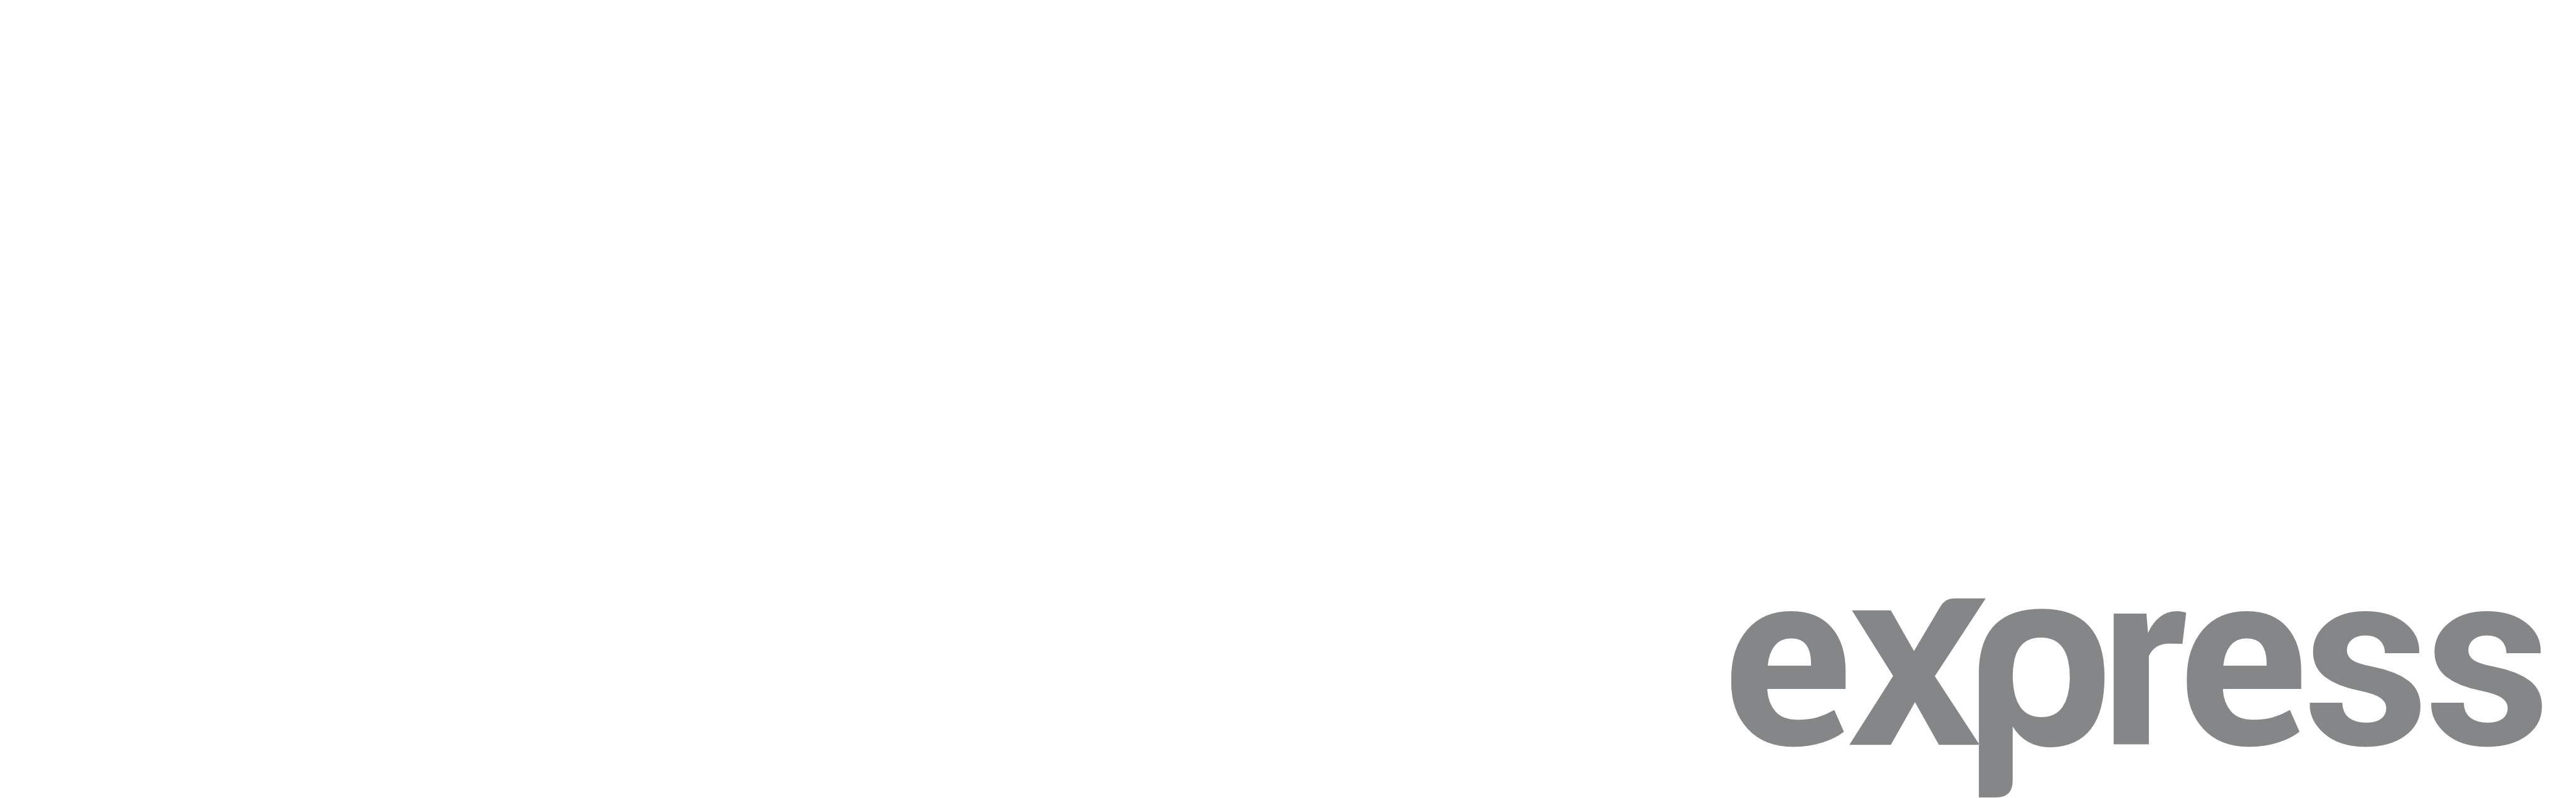 Merco Express logo 2